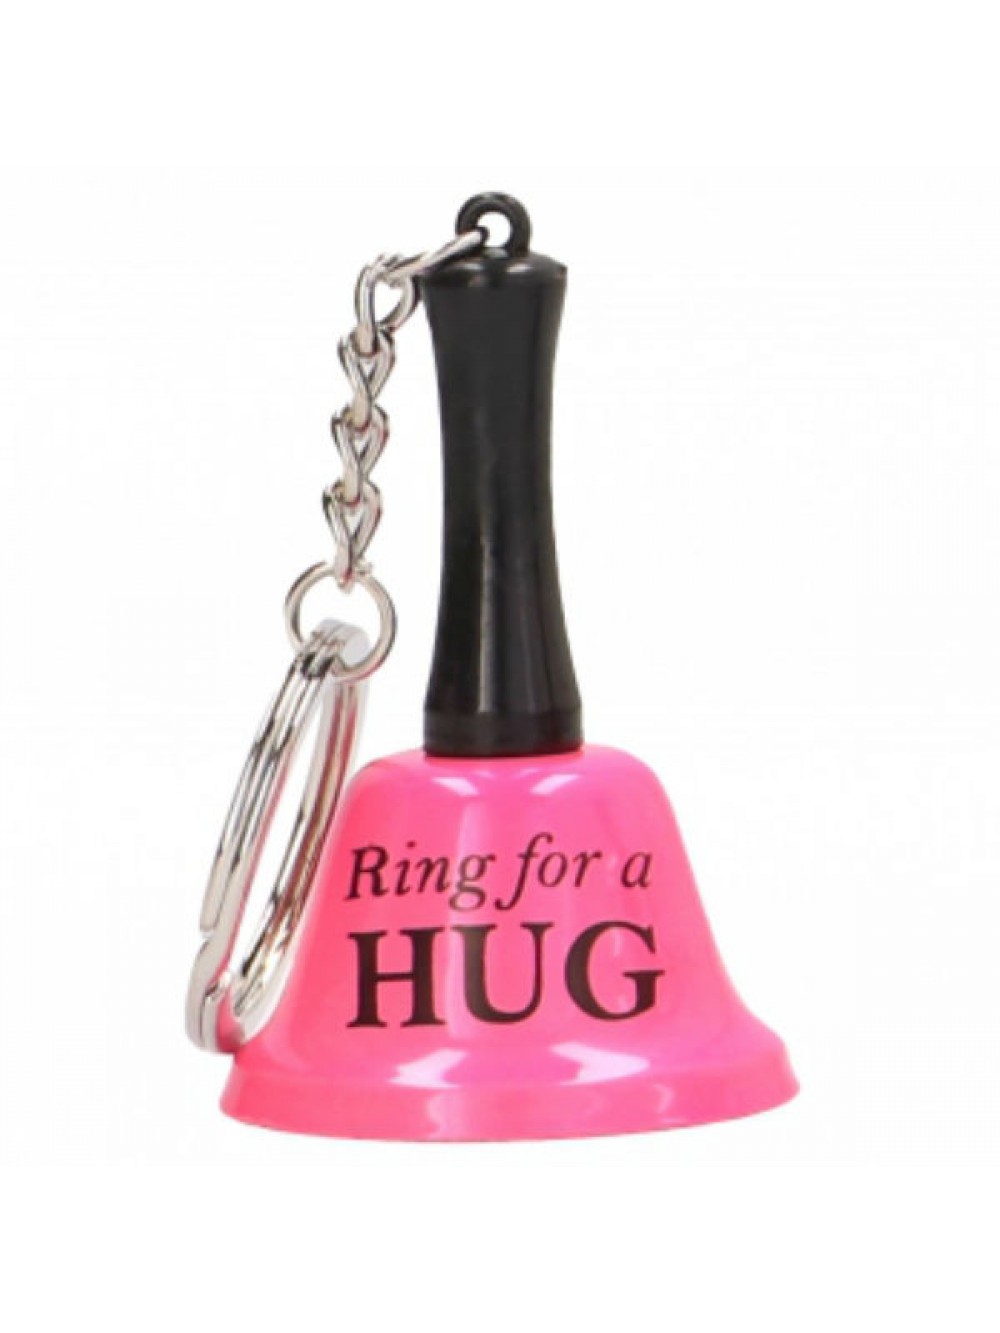 RING FOR A HUG PINK KEYRING 8714273941374